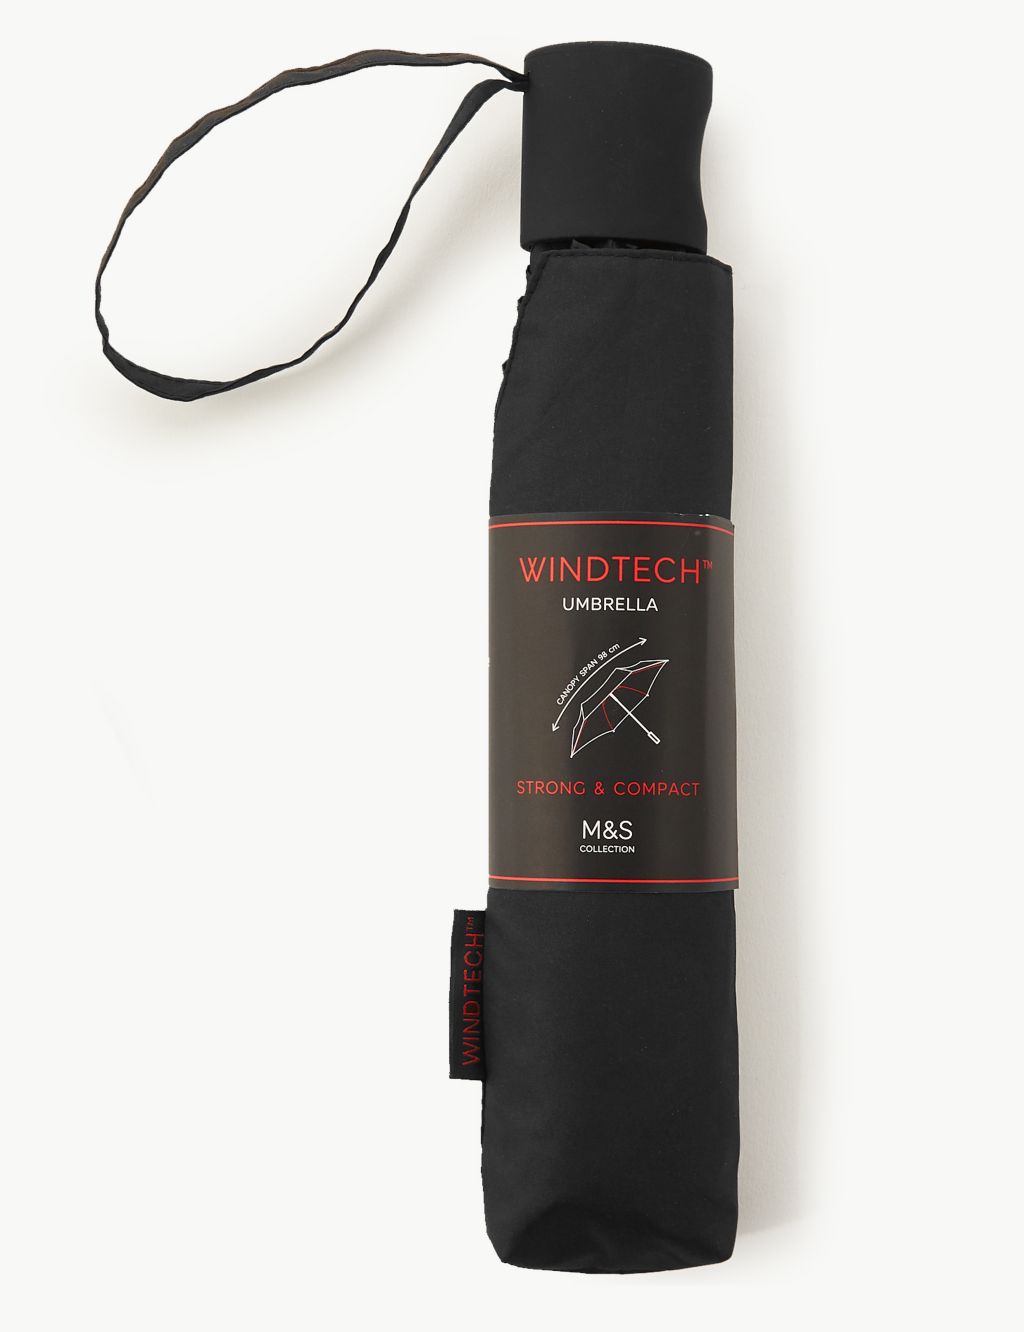 Briefcase Umbrella with Stormwear™ & Windtech™ image 4